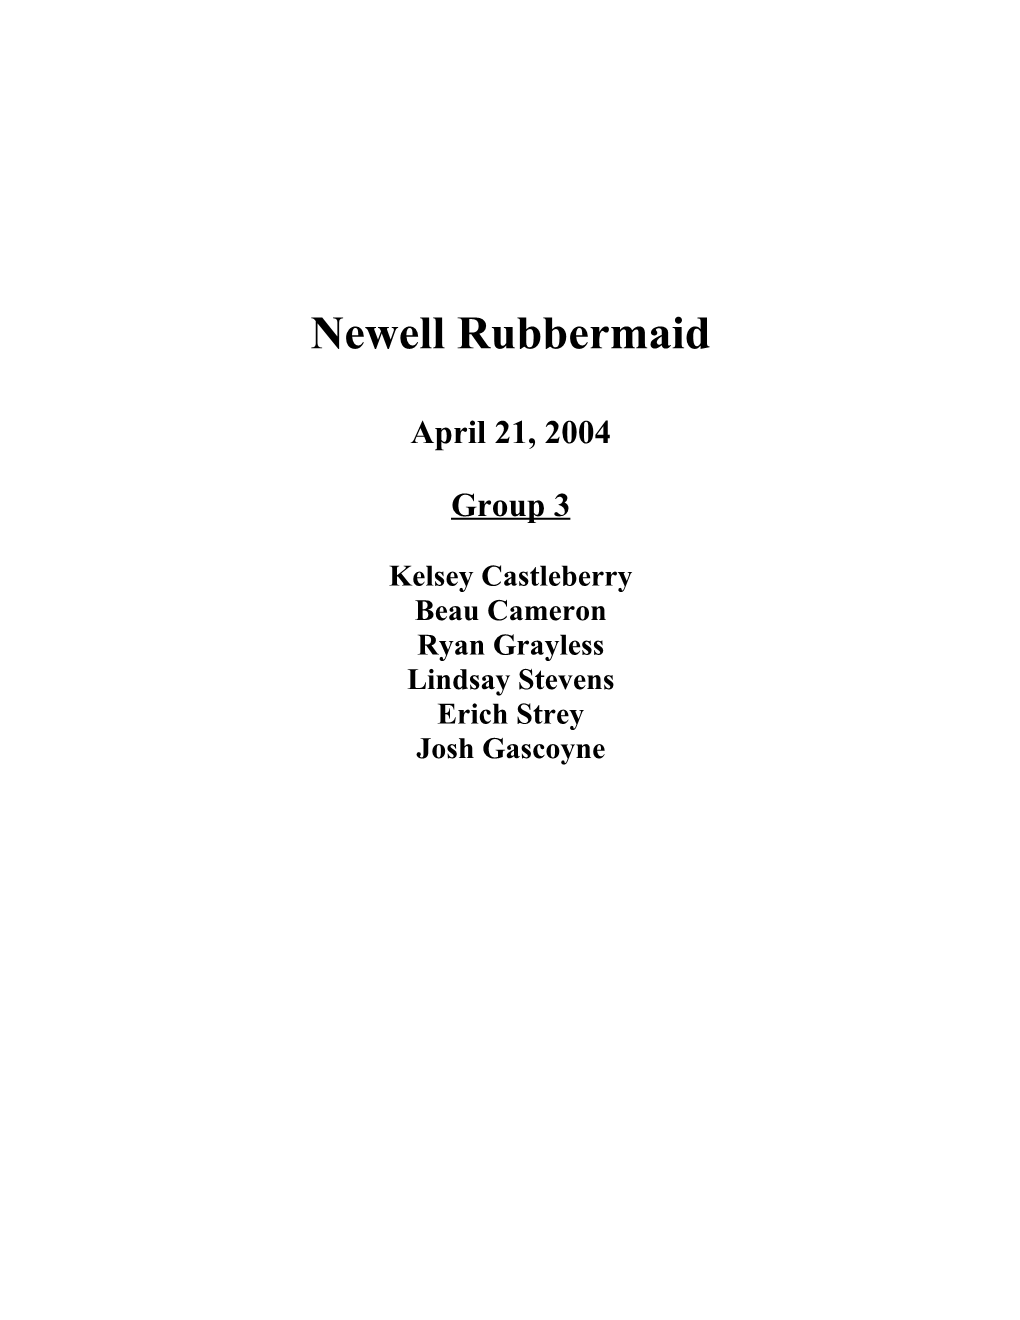 Newell Rubbermaid